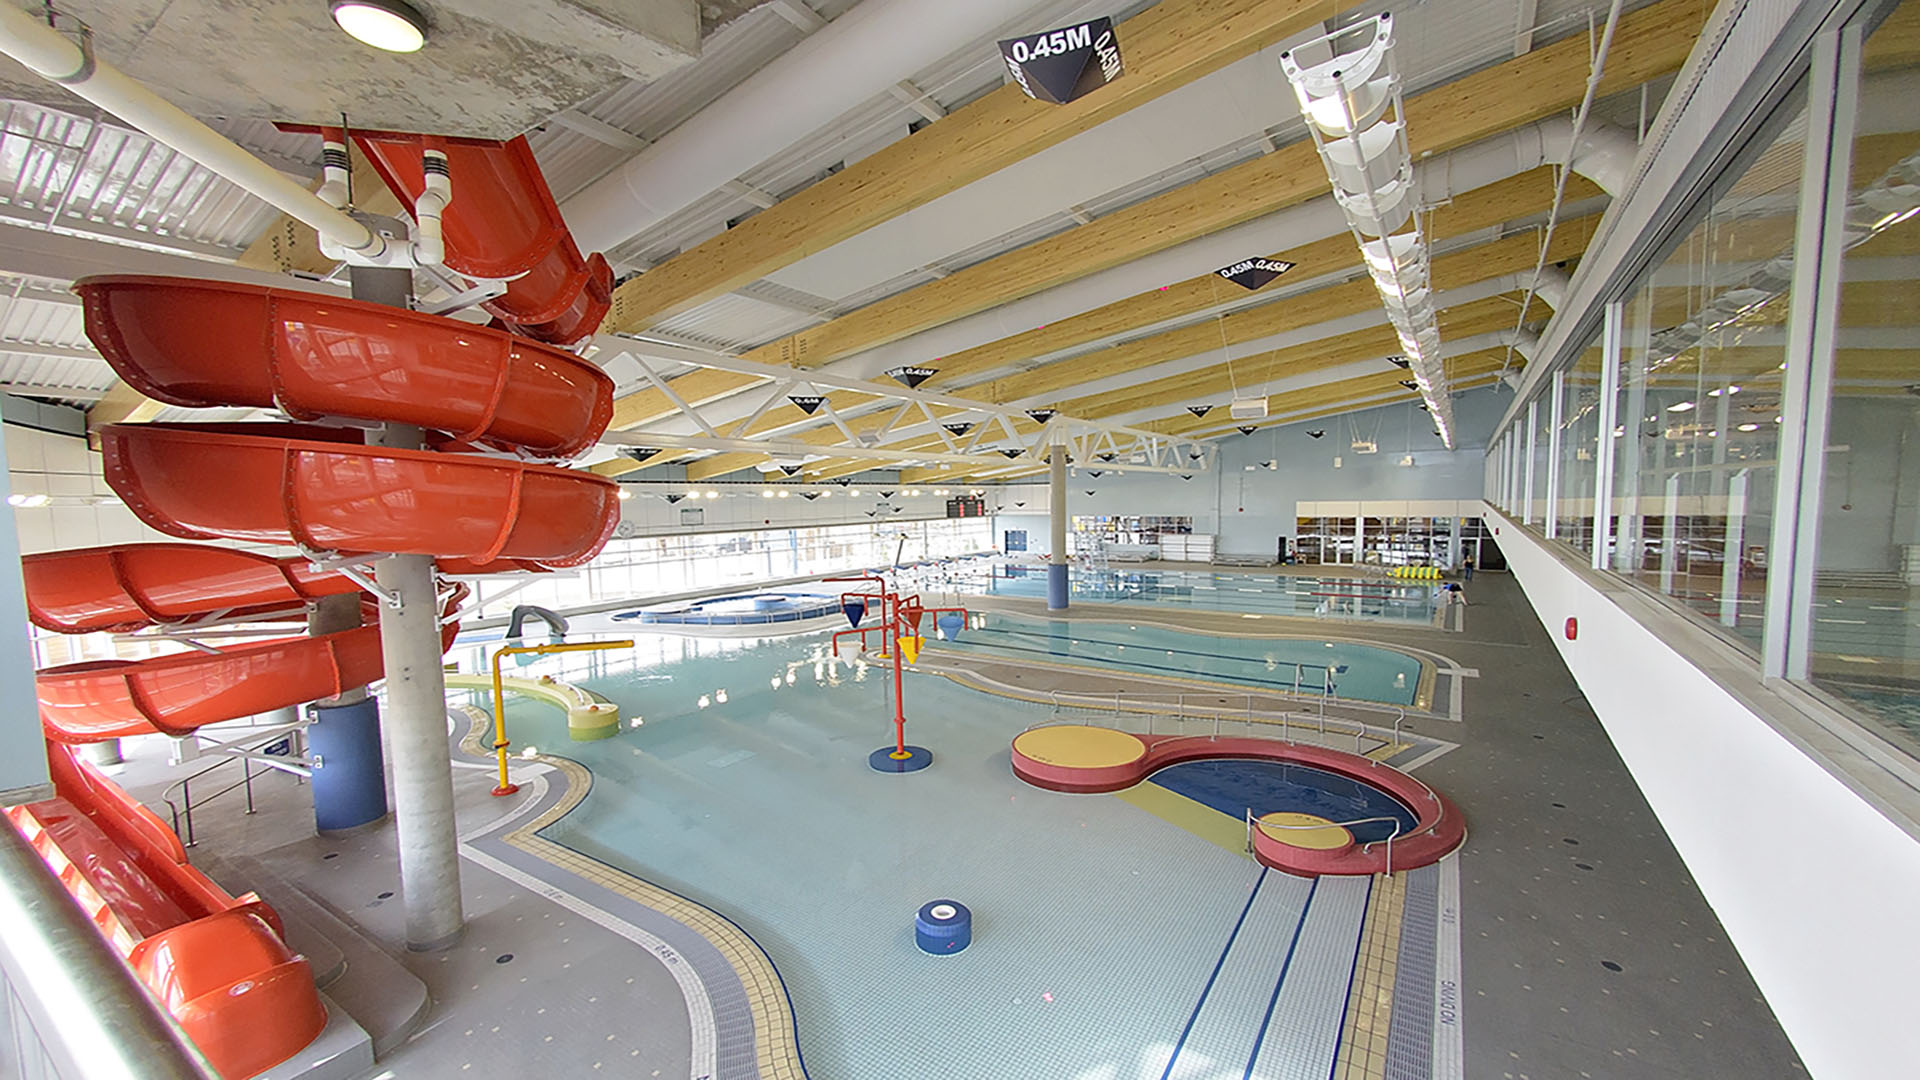 Northern Rockies Regional Recreation Centre Indoor Swimming Pool